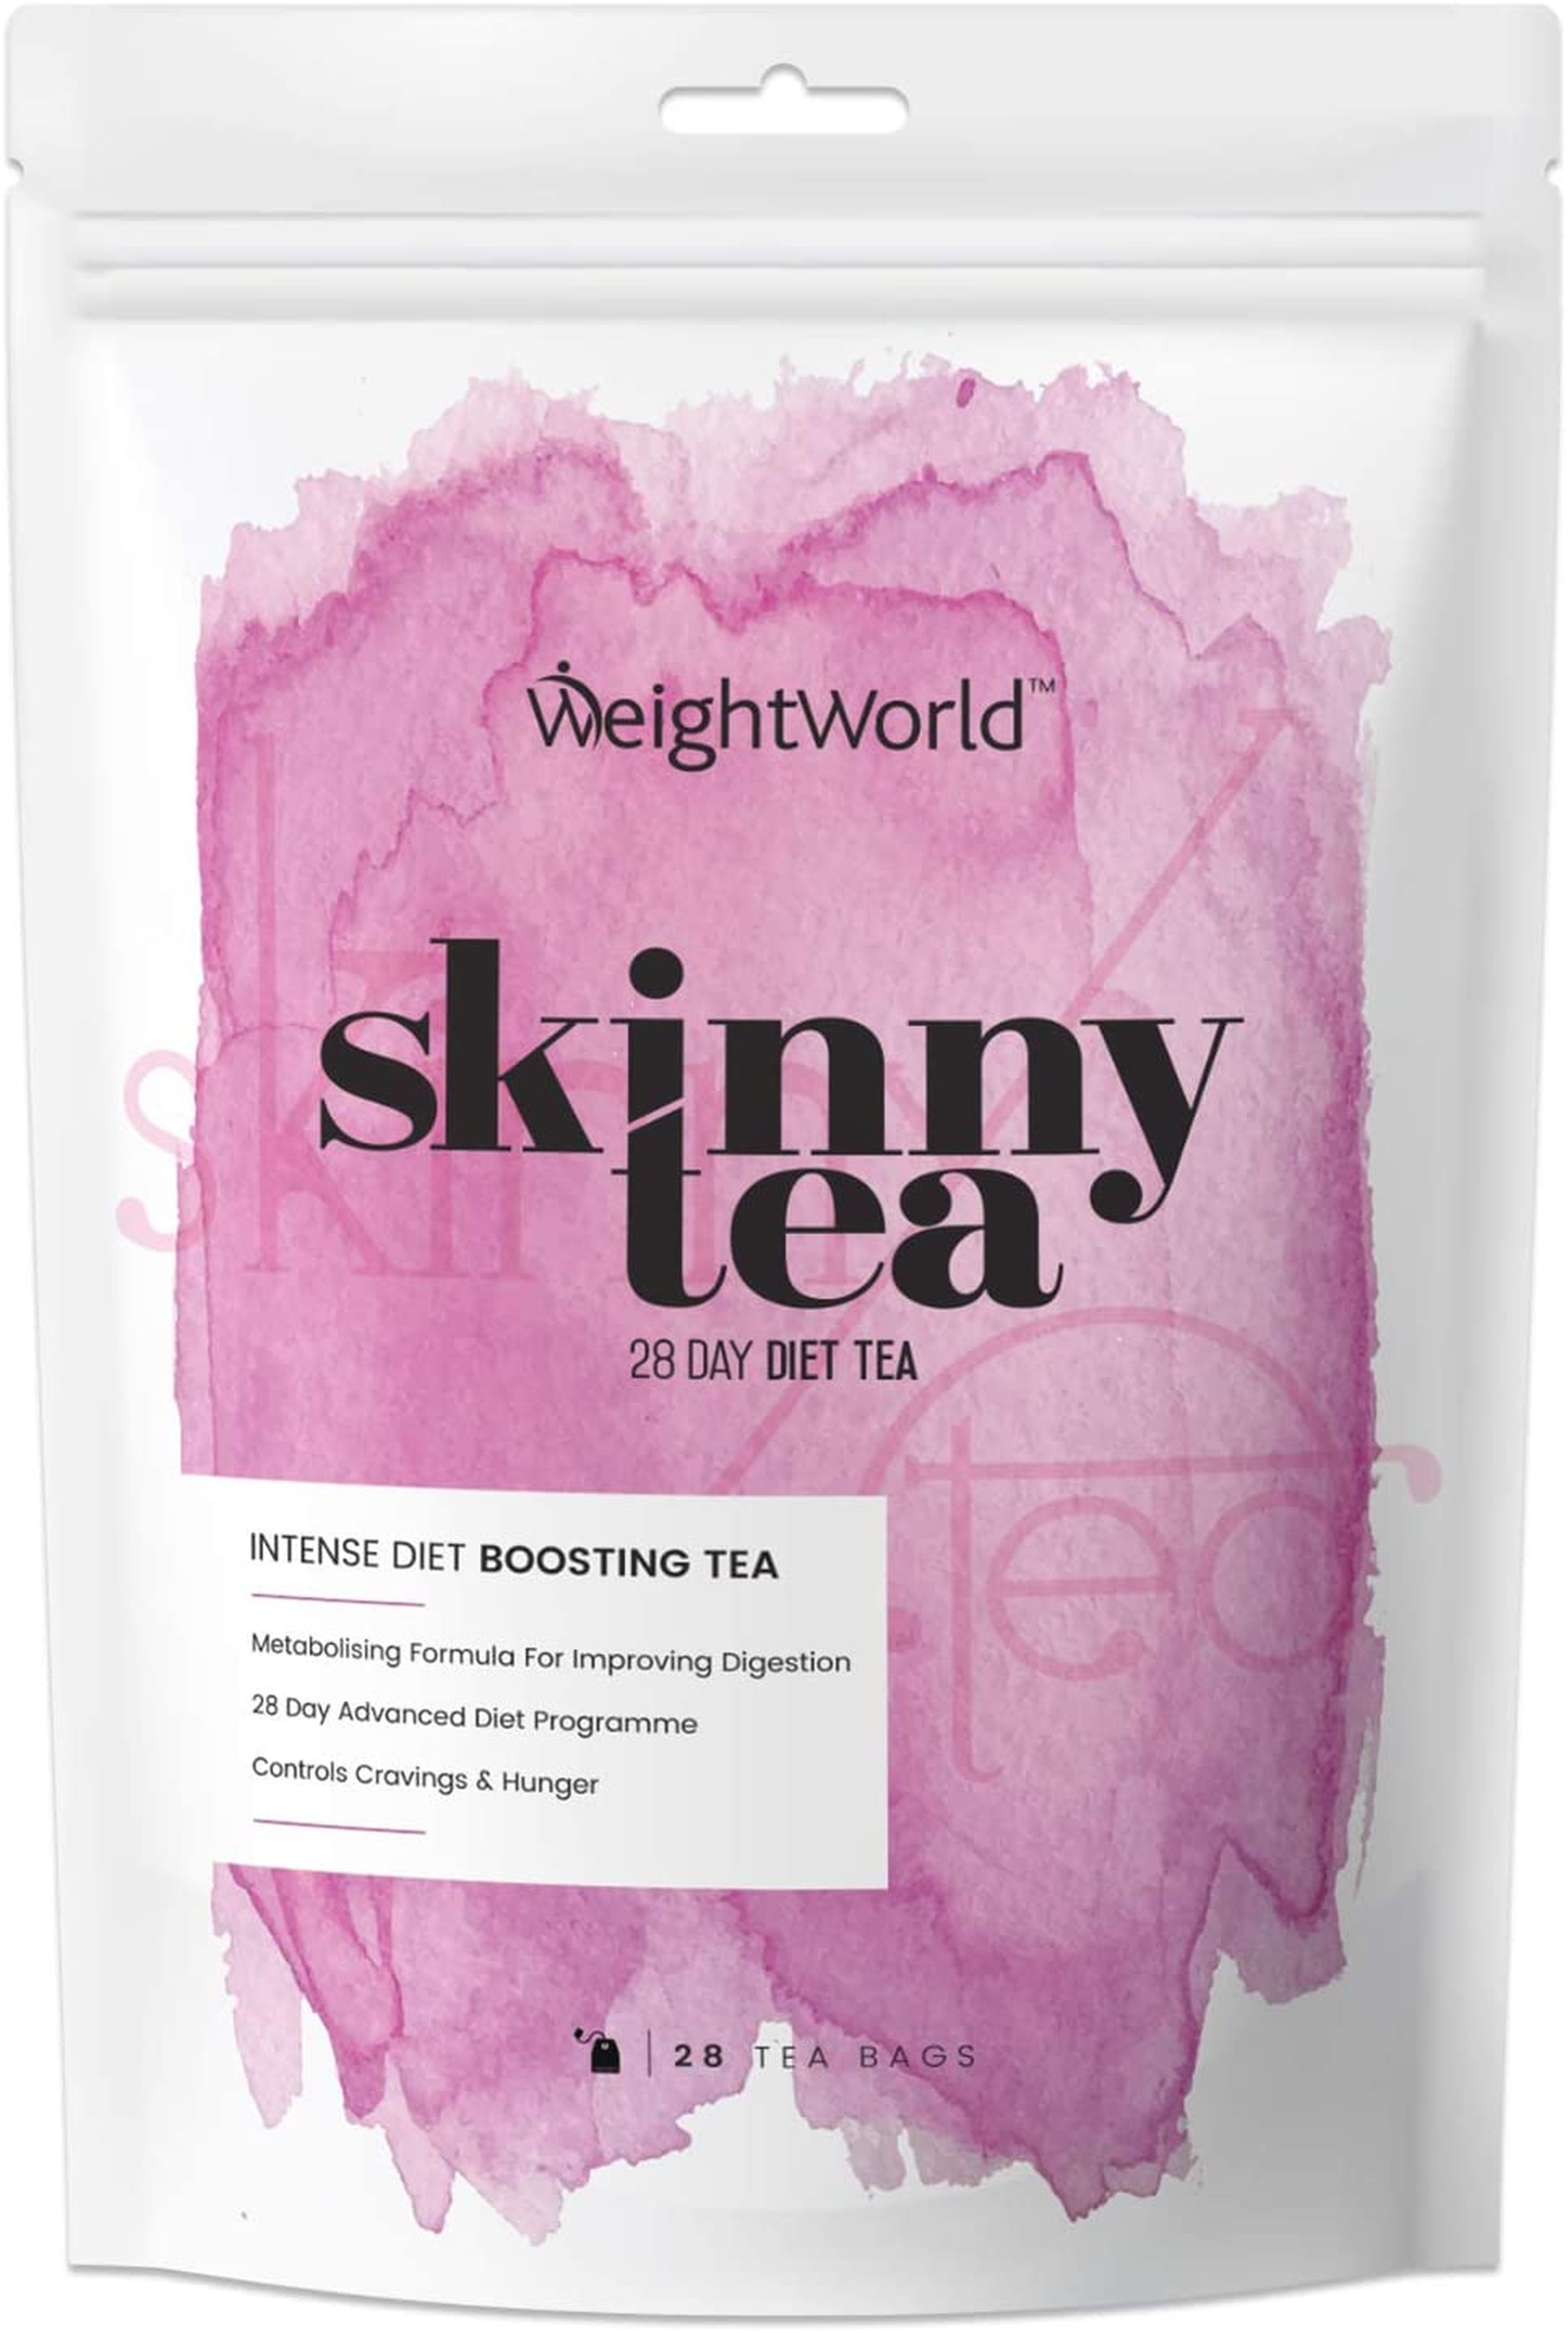 WeightWorld skinny tea